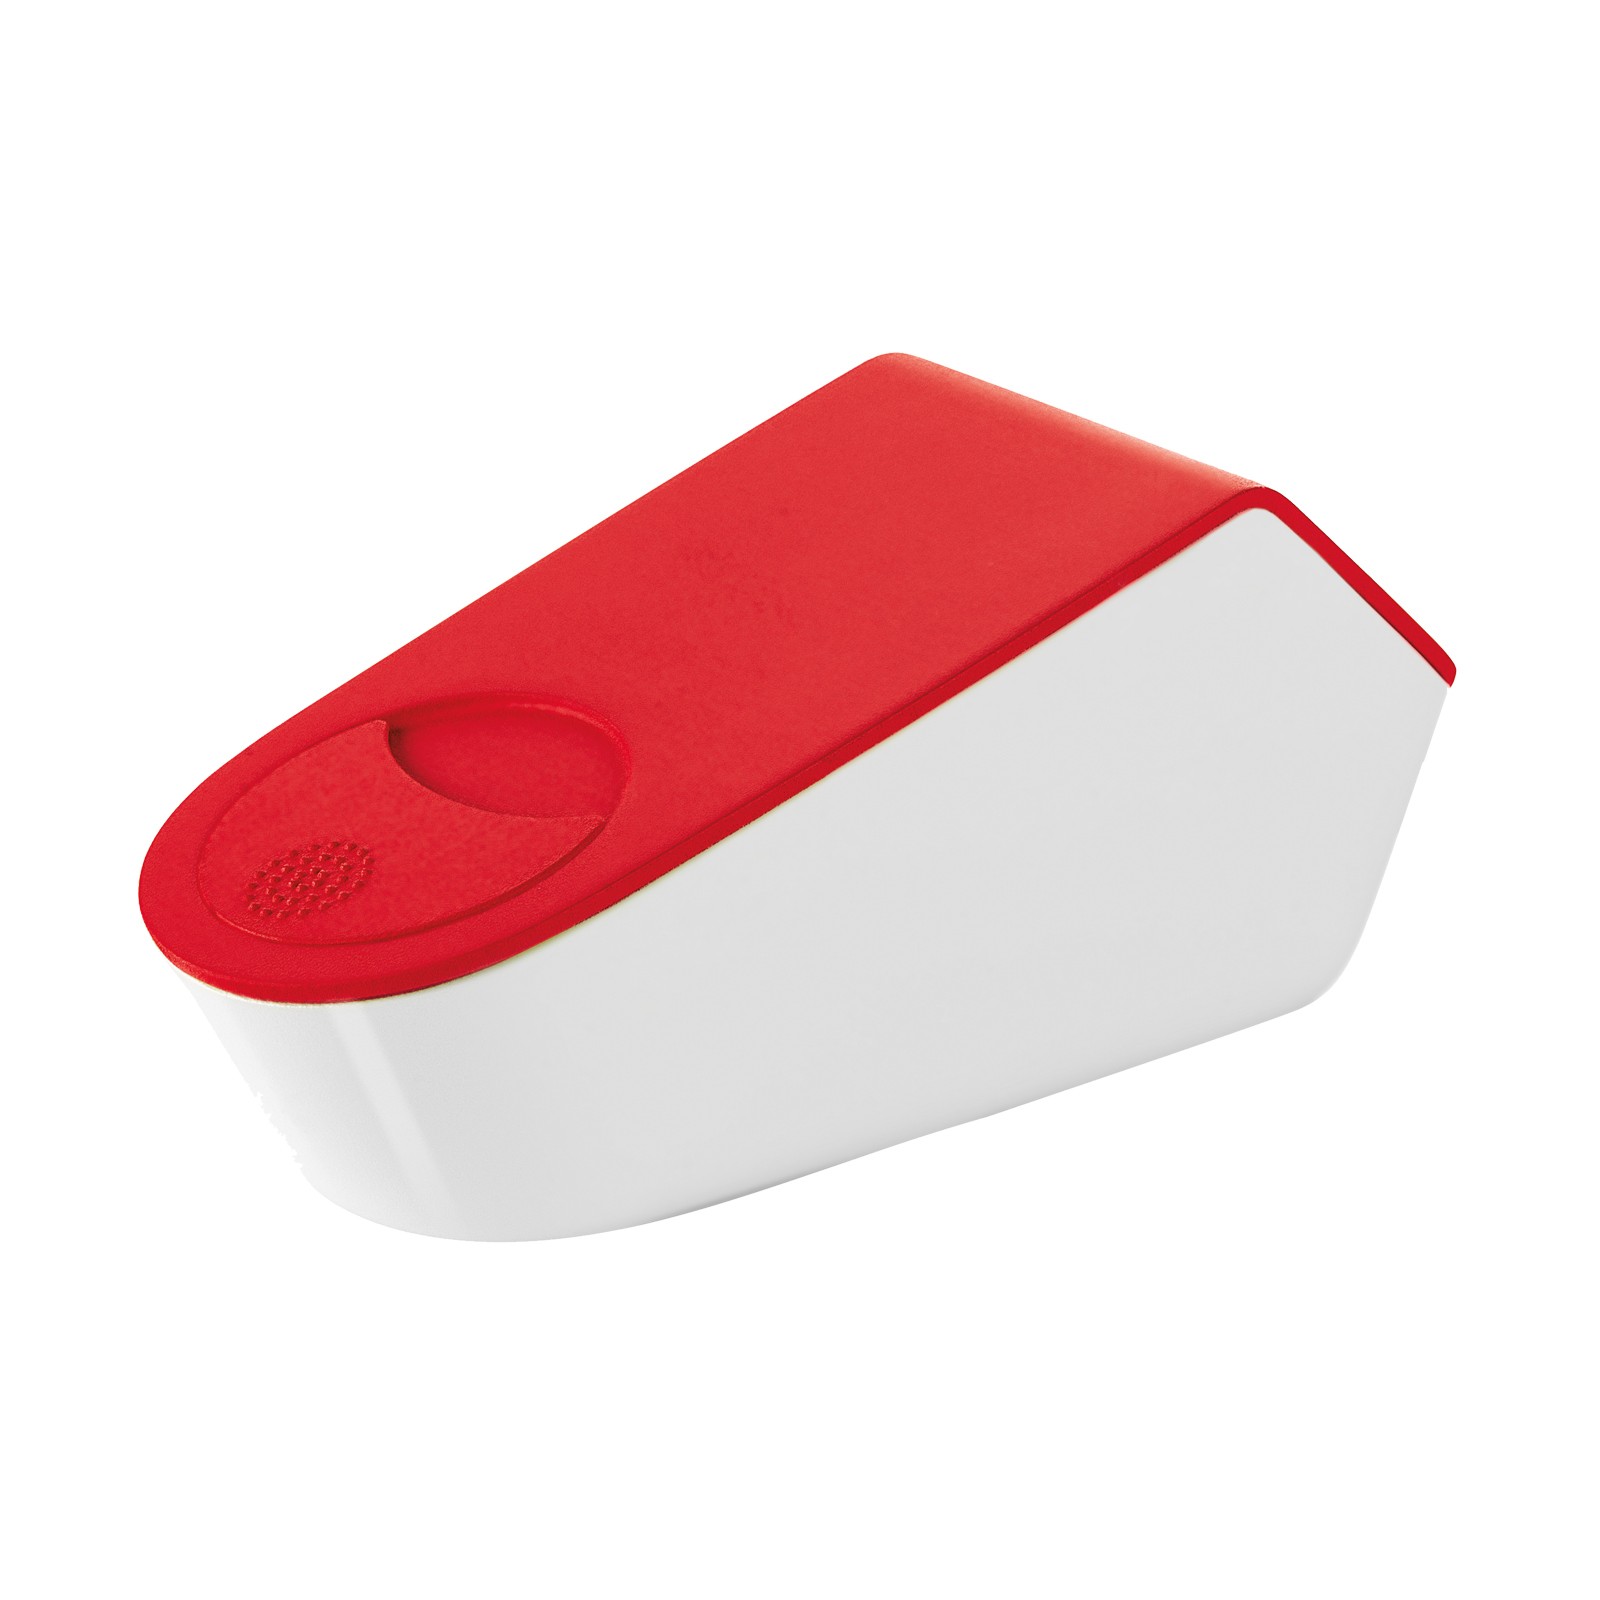 Терка с контейнером Guzzini KITCHEN, цвет красный, пластик Guzzini 29960055 - фото 1